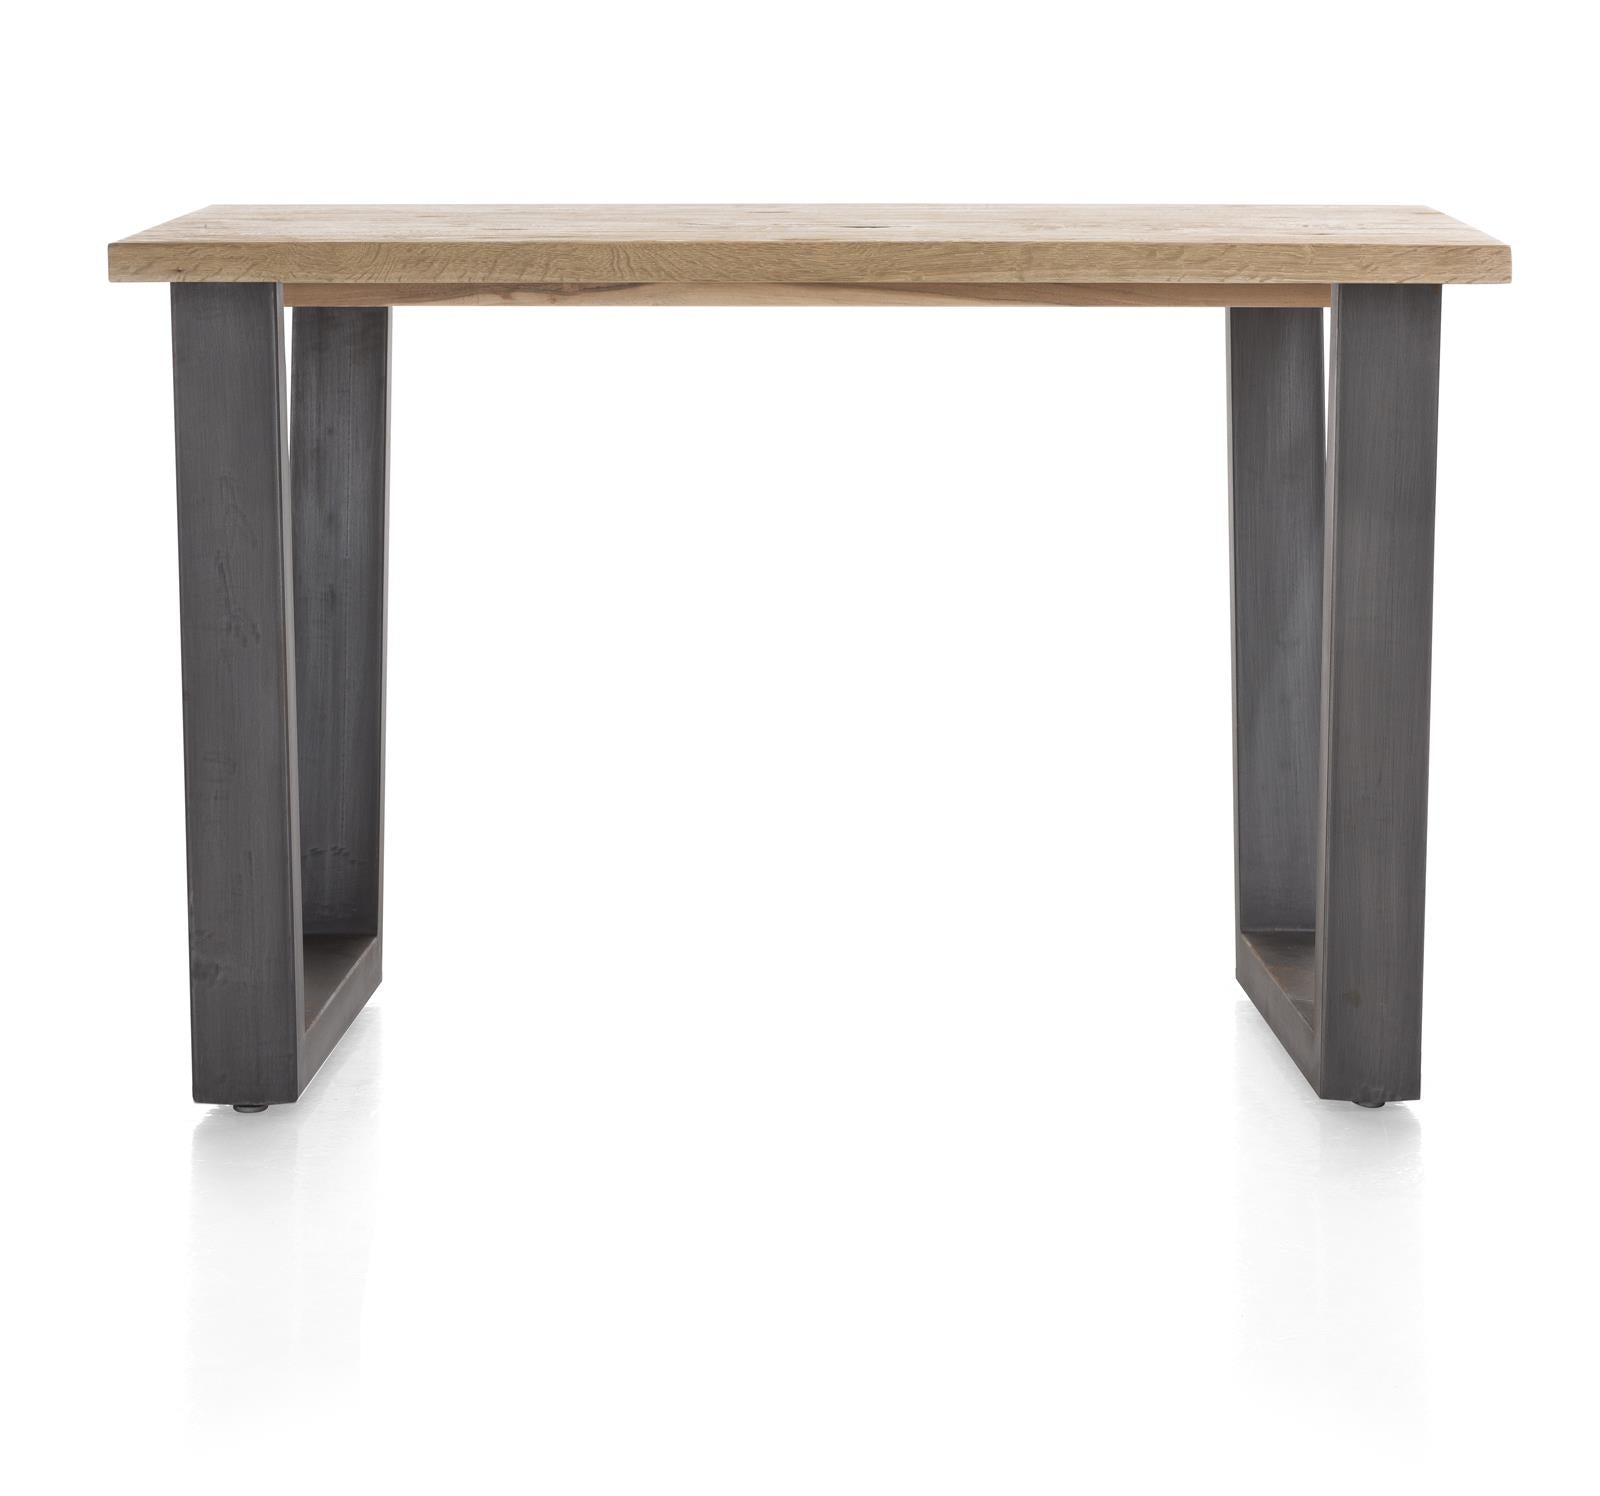 Habufa Metalox Bar Tables in Oak-bar Tables-Habufa-160 cms-U shape metal legs-Wavy edge-Against The Grain Furniture